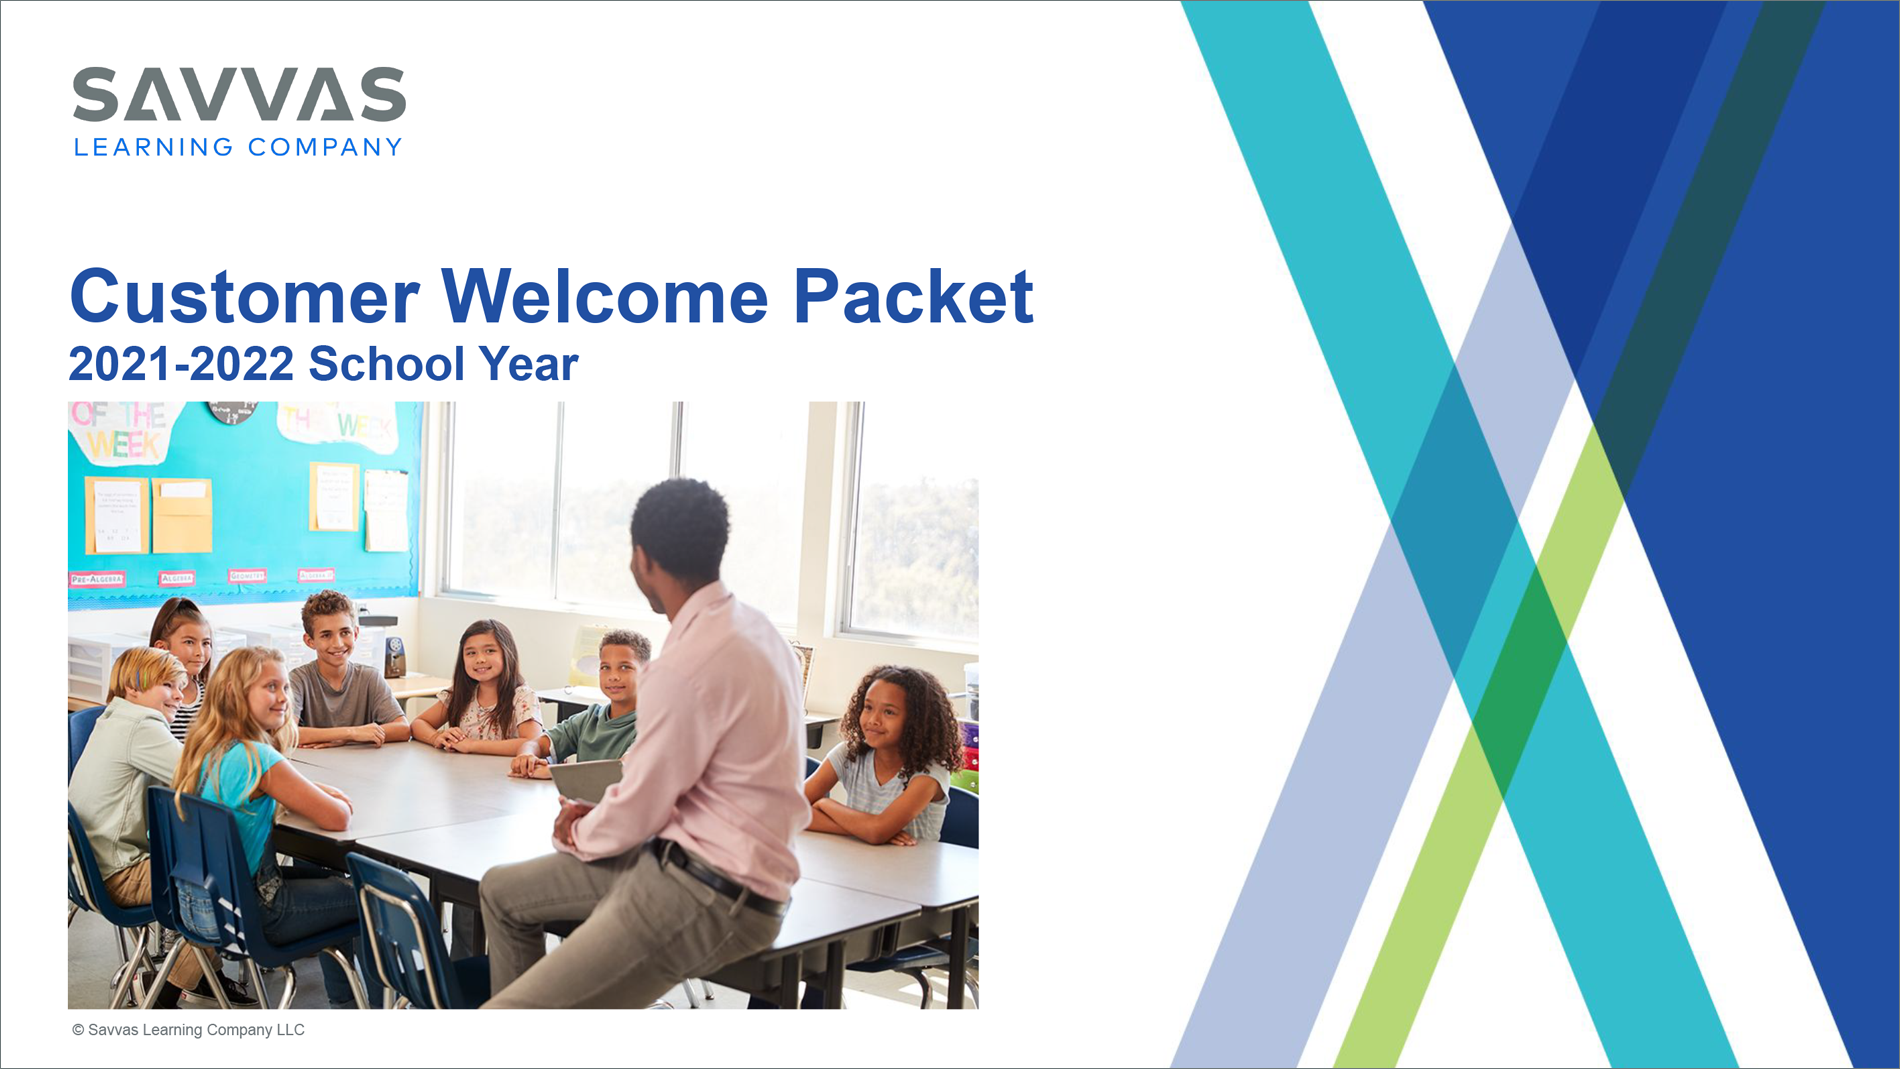 Customer Welcome Packet
2021-2022 School Year